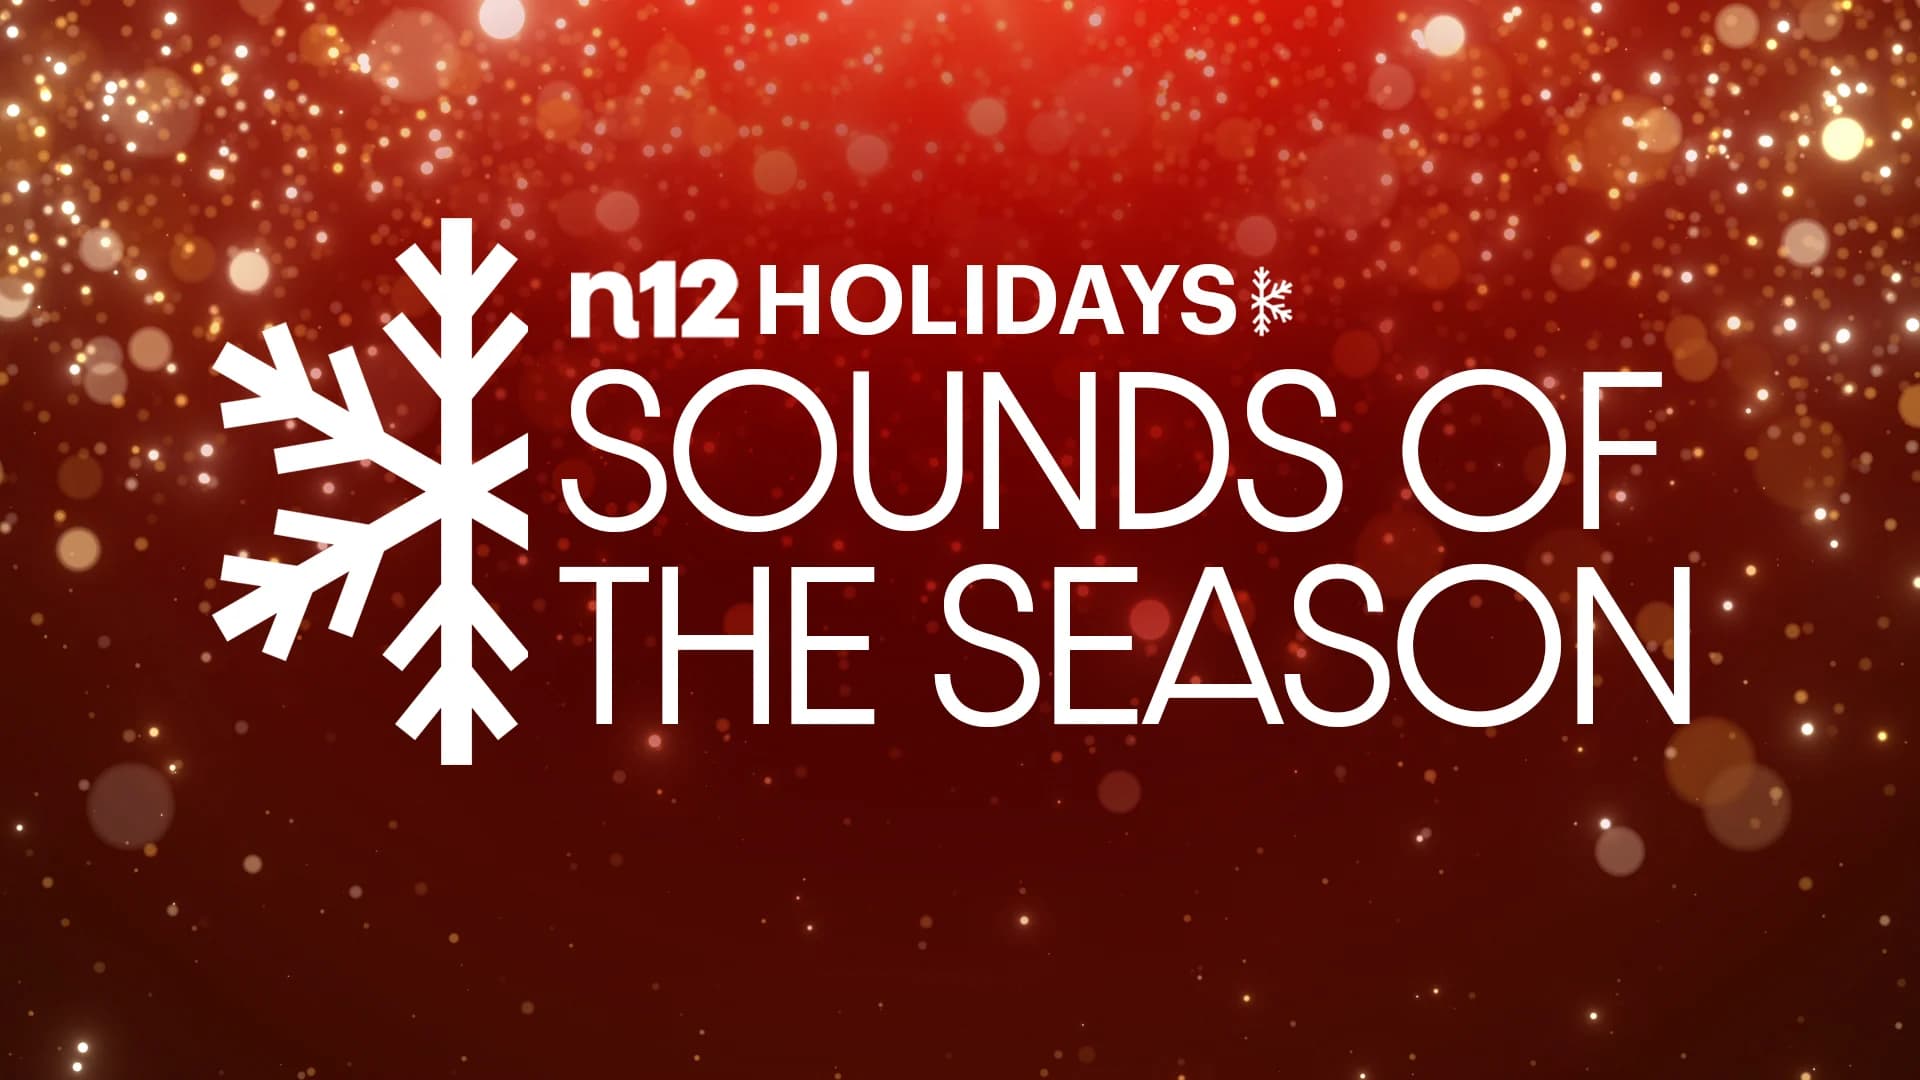 Sounds of the Season winners on Long Island revealed